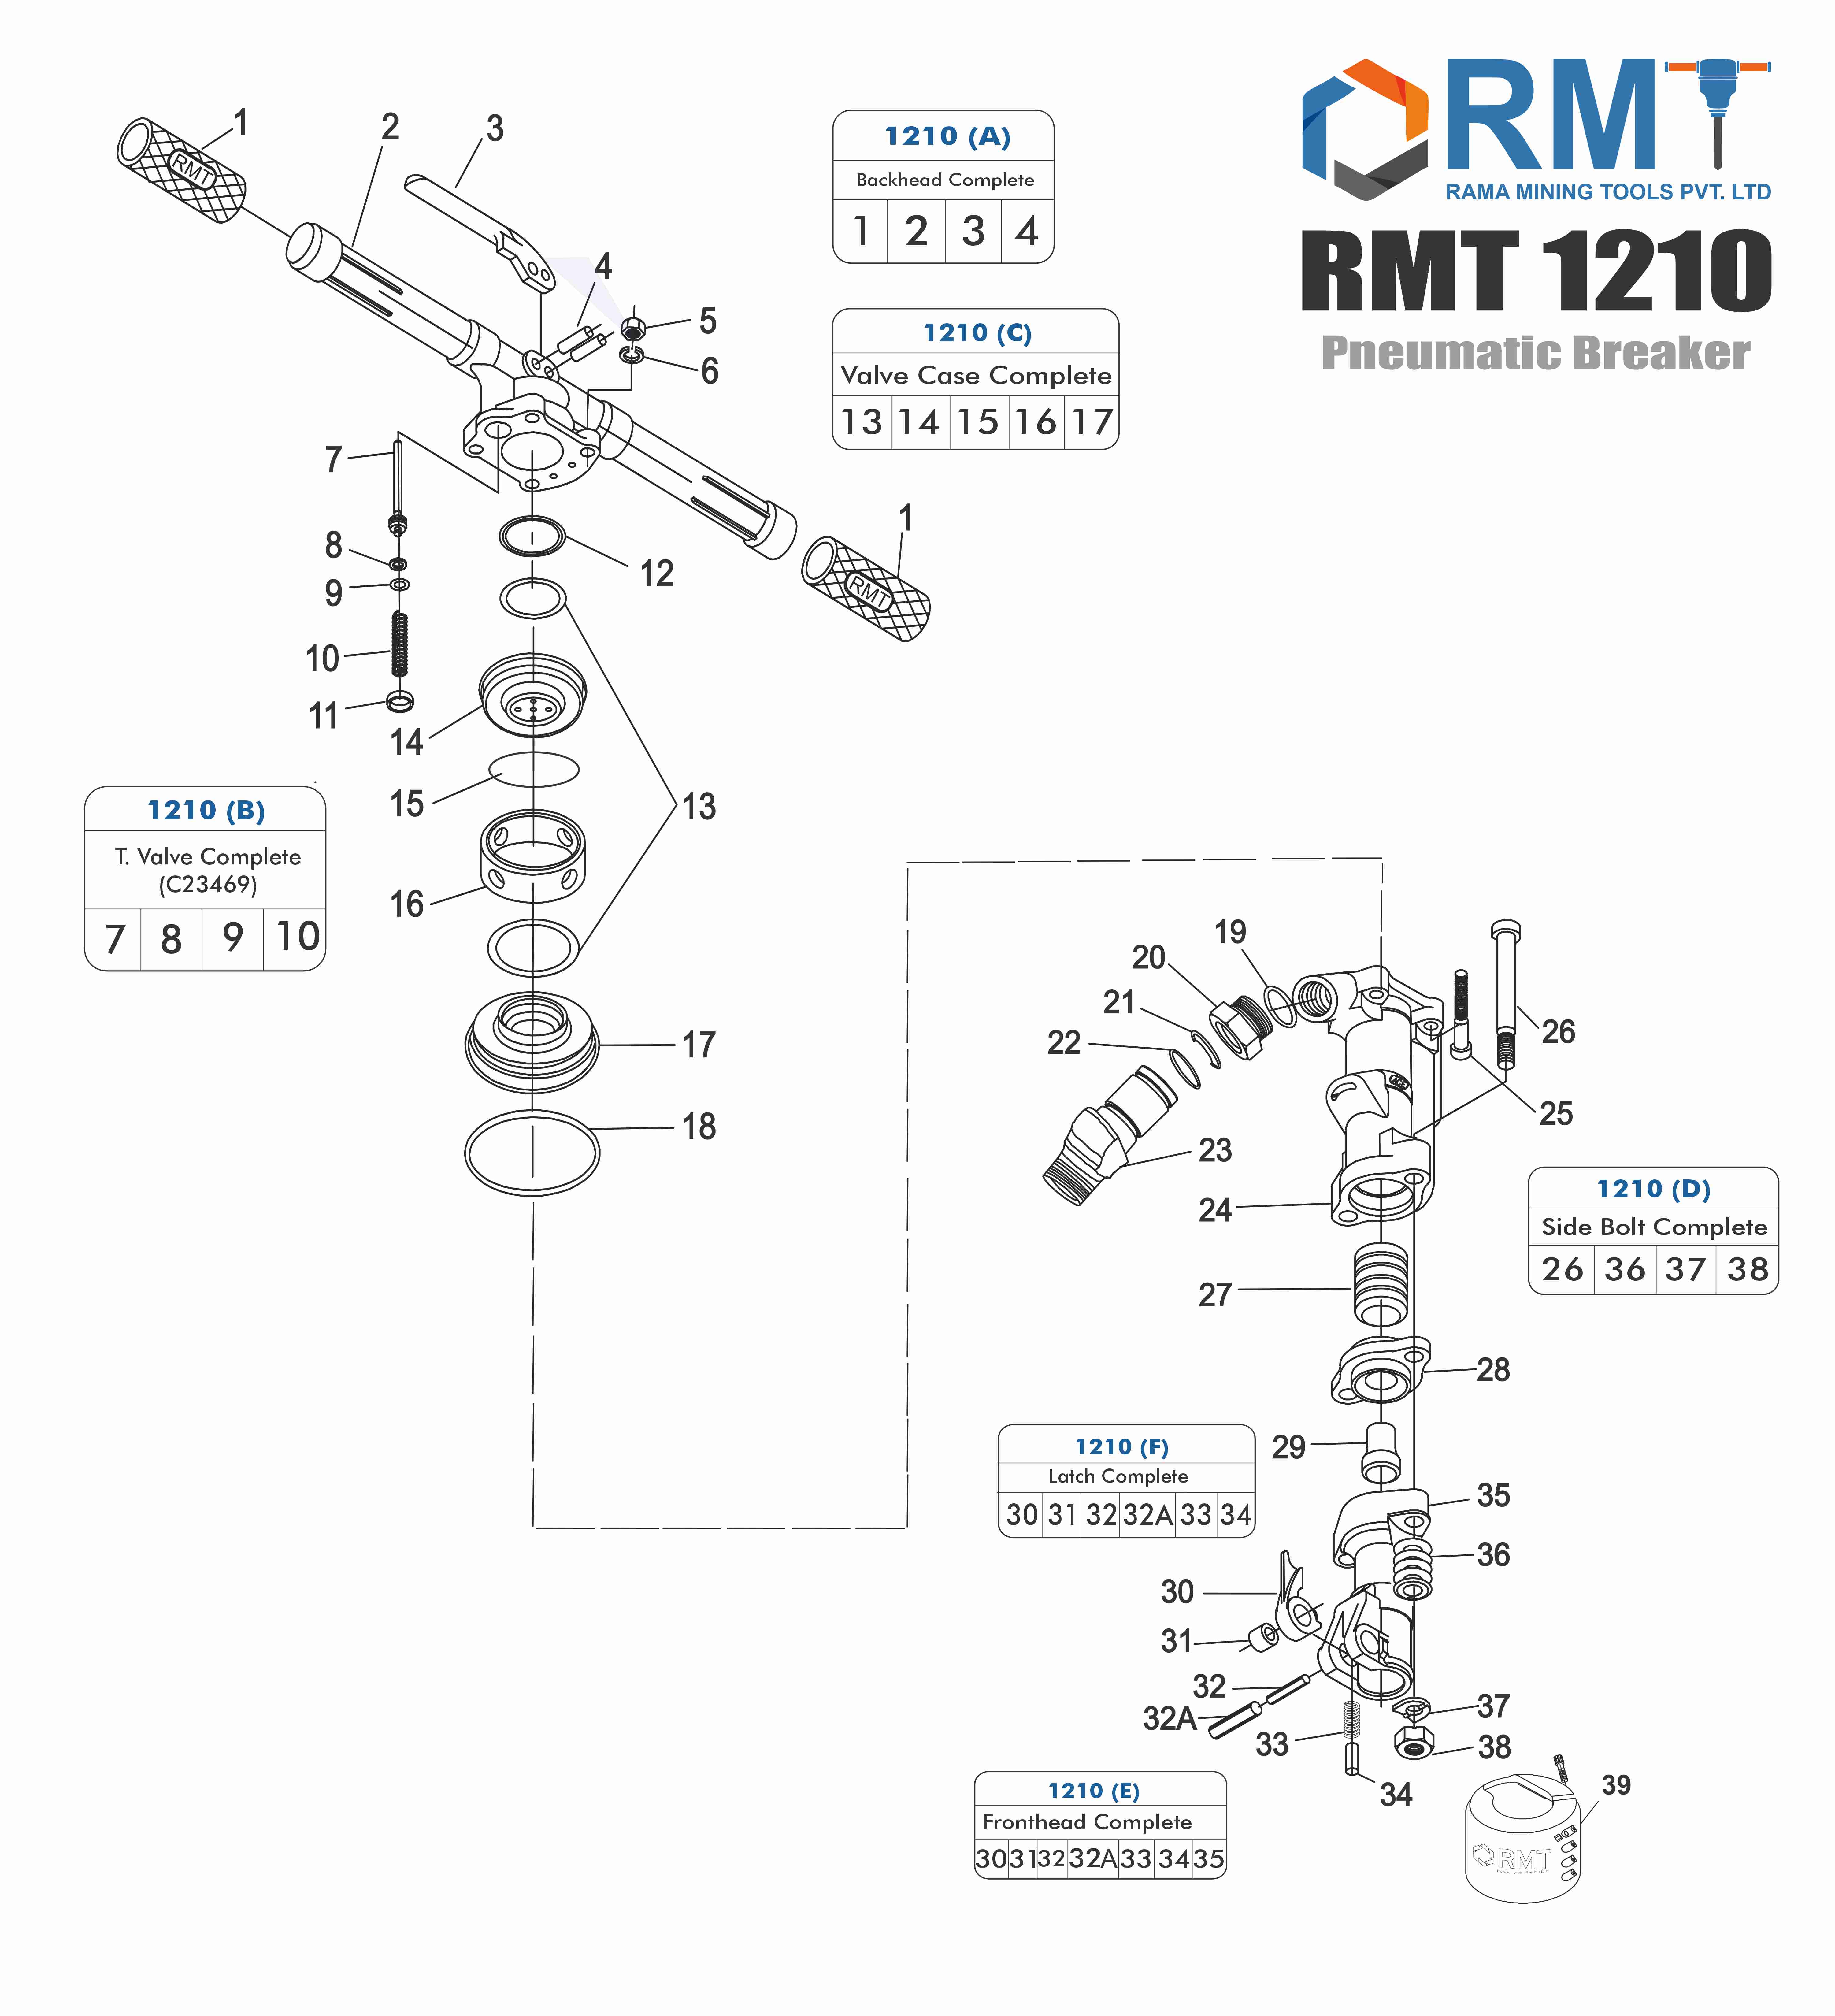 RMT 1210 - Pneumatic Breaker